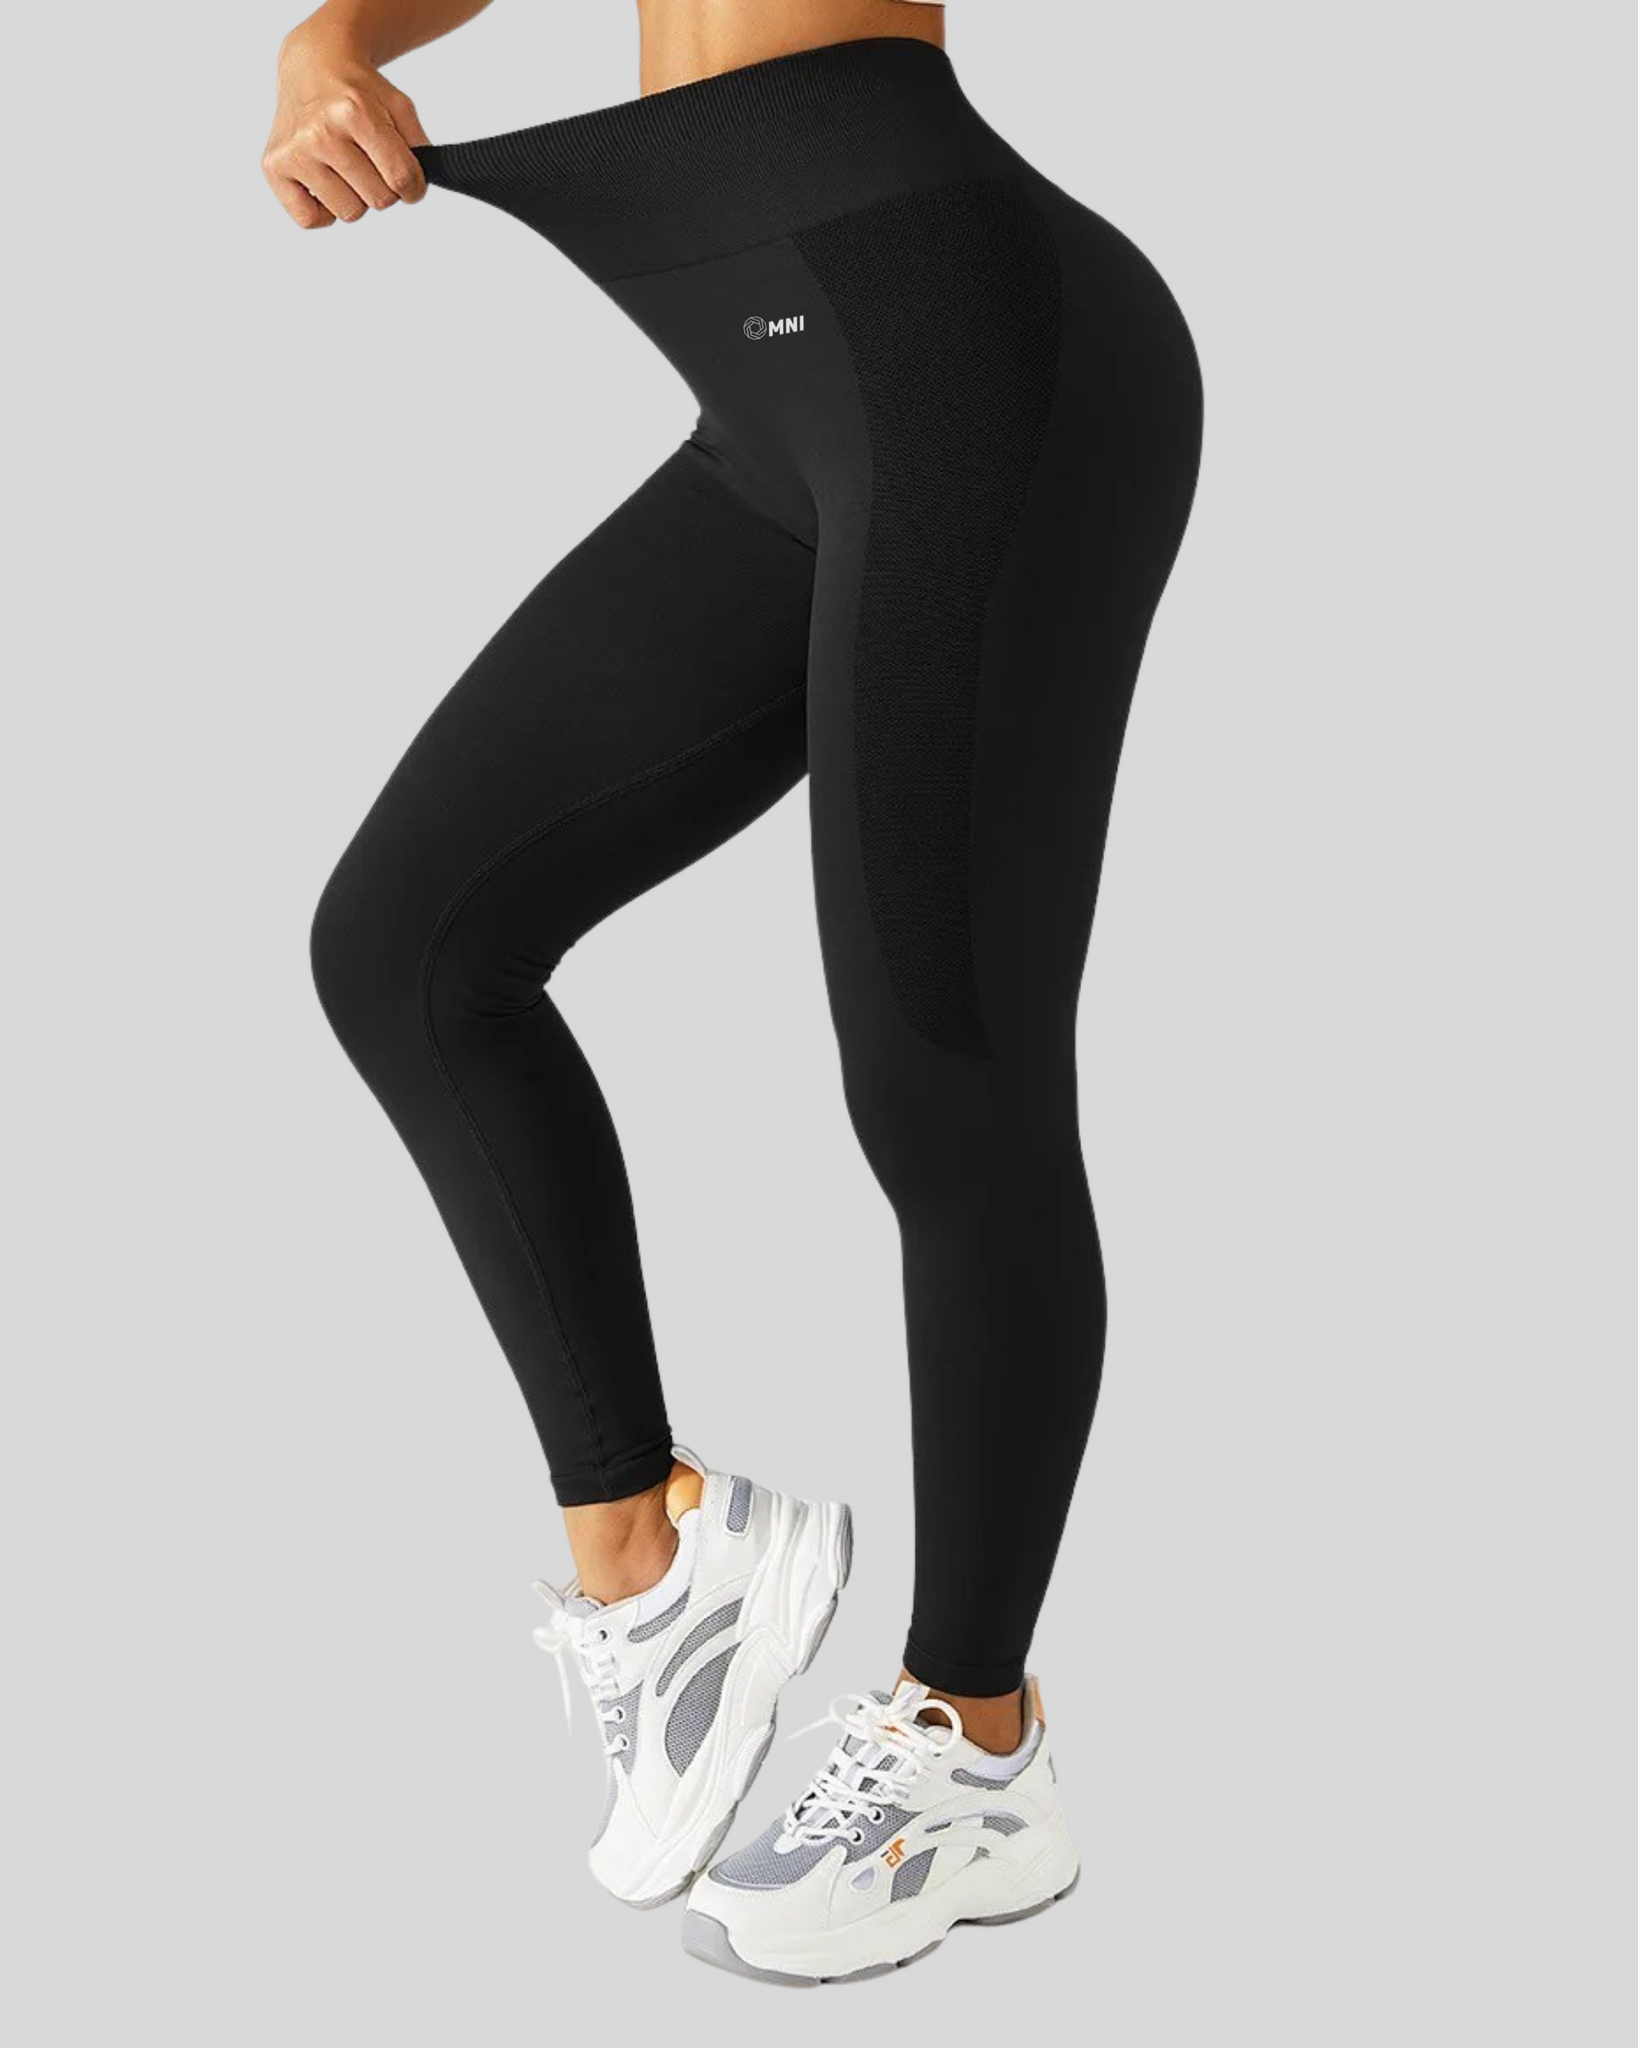 Women's Warm Simplicity Leggings - All In Motion™ Black XL